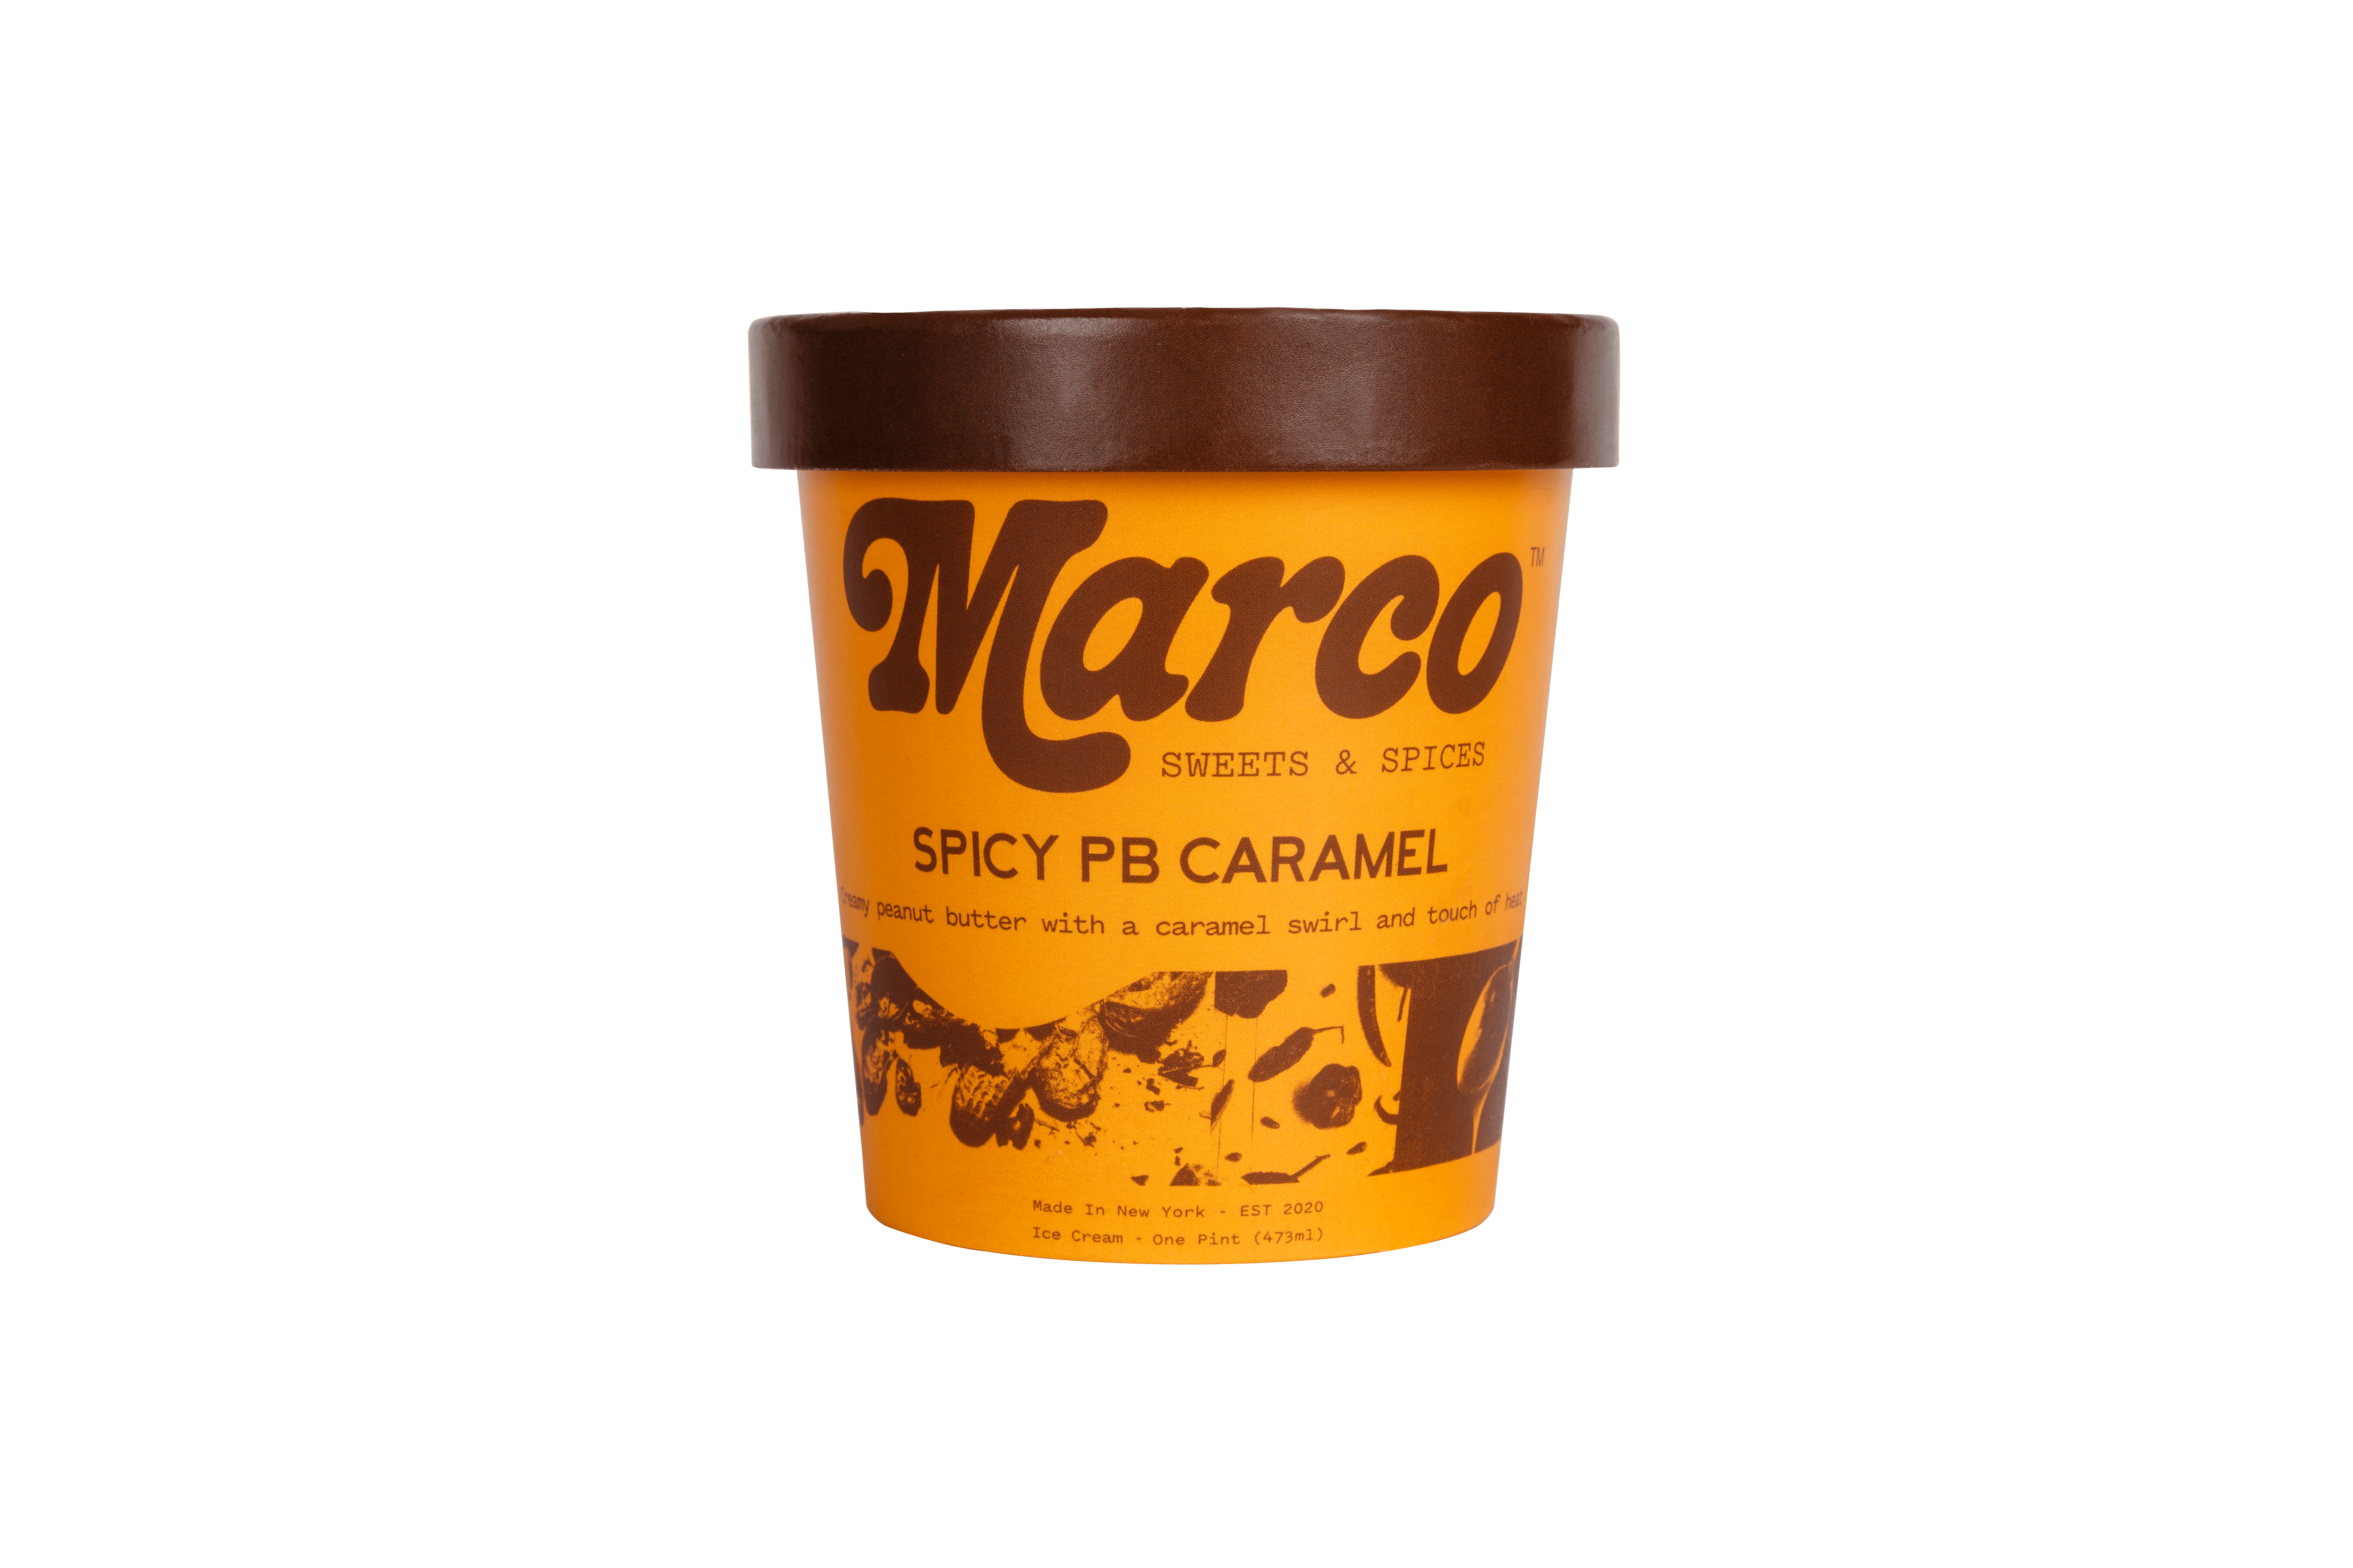 Marco Sweets Spicy PB Caramel Ice Cream Pint 8 units per case 16.0 oz